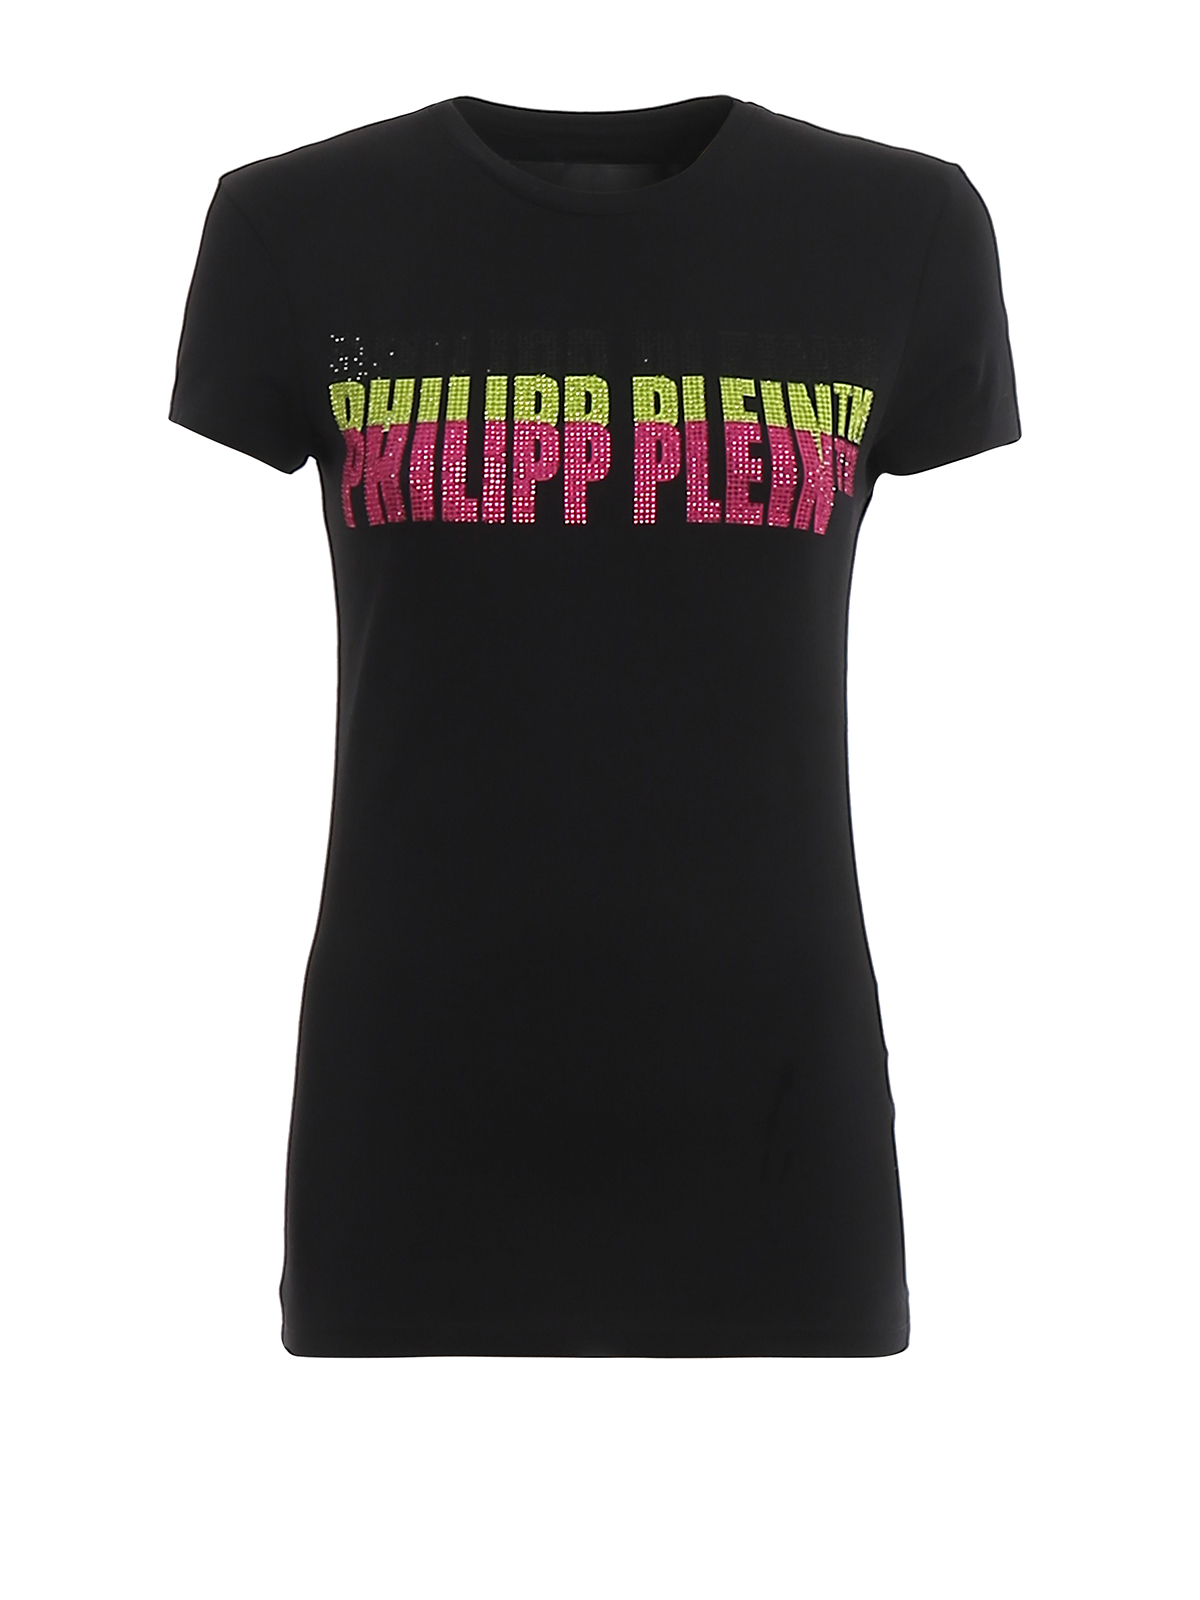 Philipp Plein, T-shirt